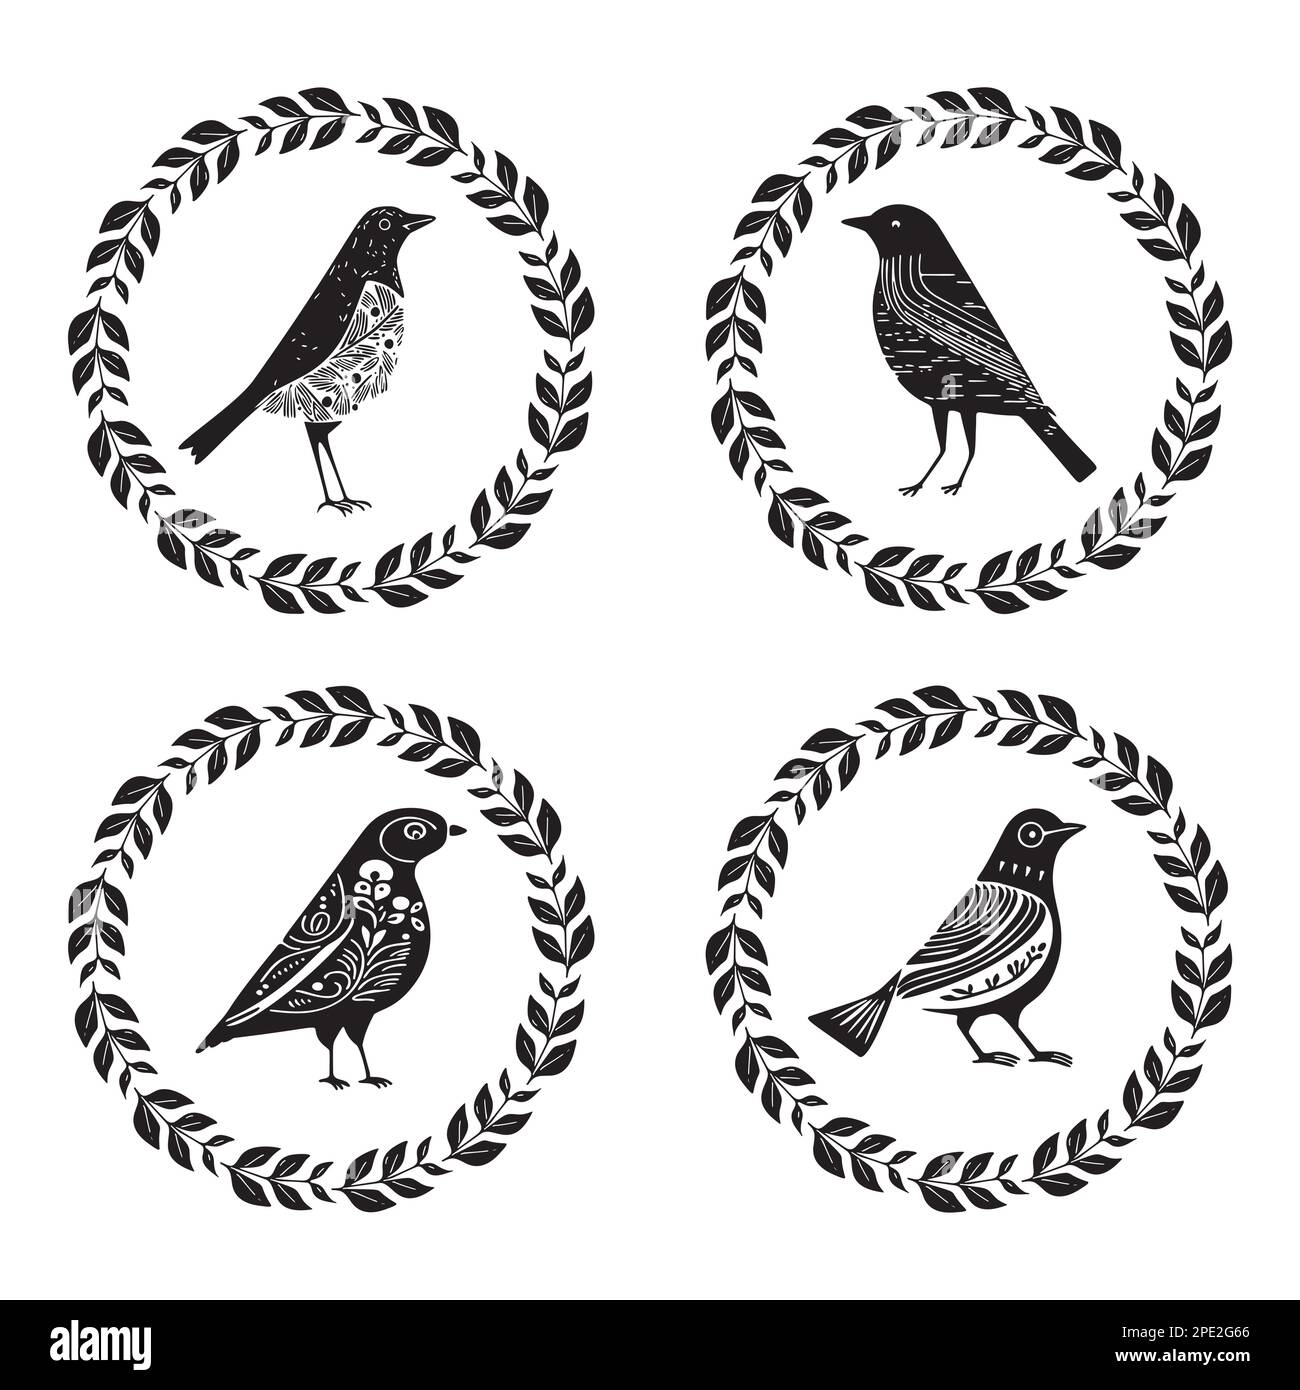 Cute bird vector icon. Low brow wildlife motif in scnadi style collection.  Stock Vector